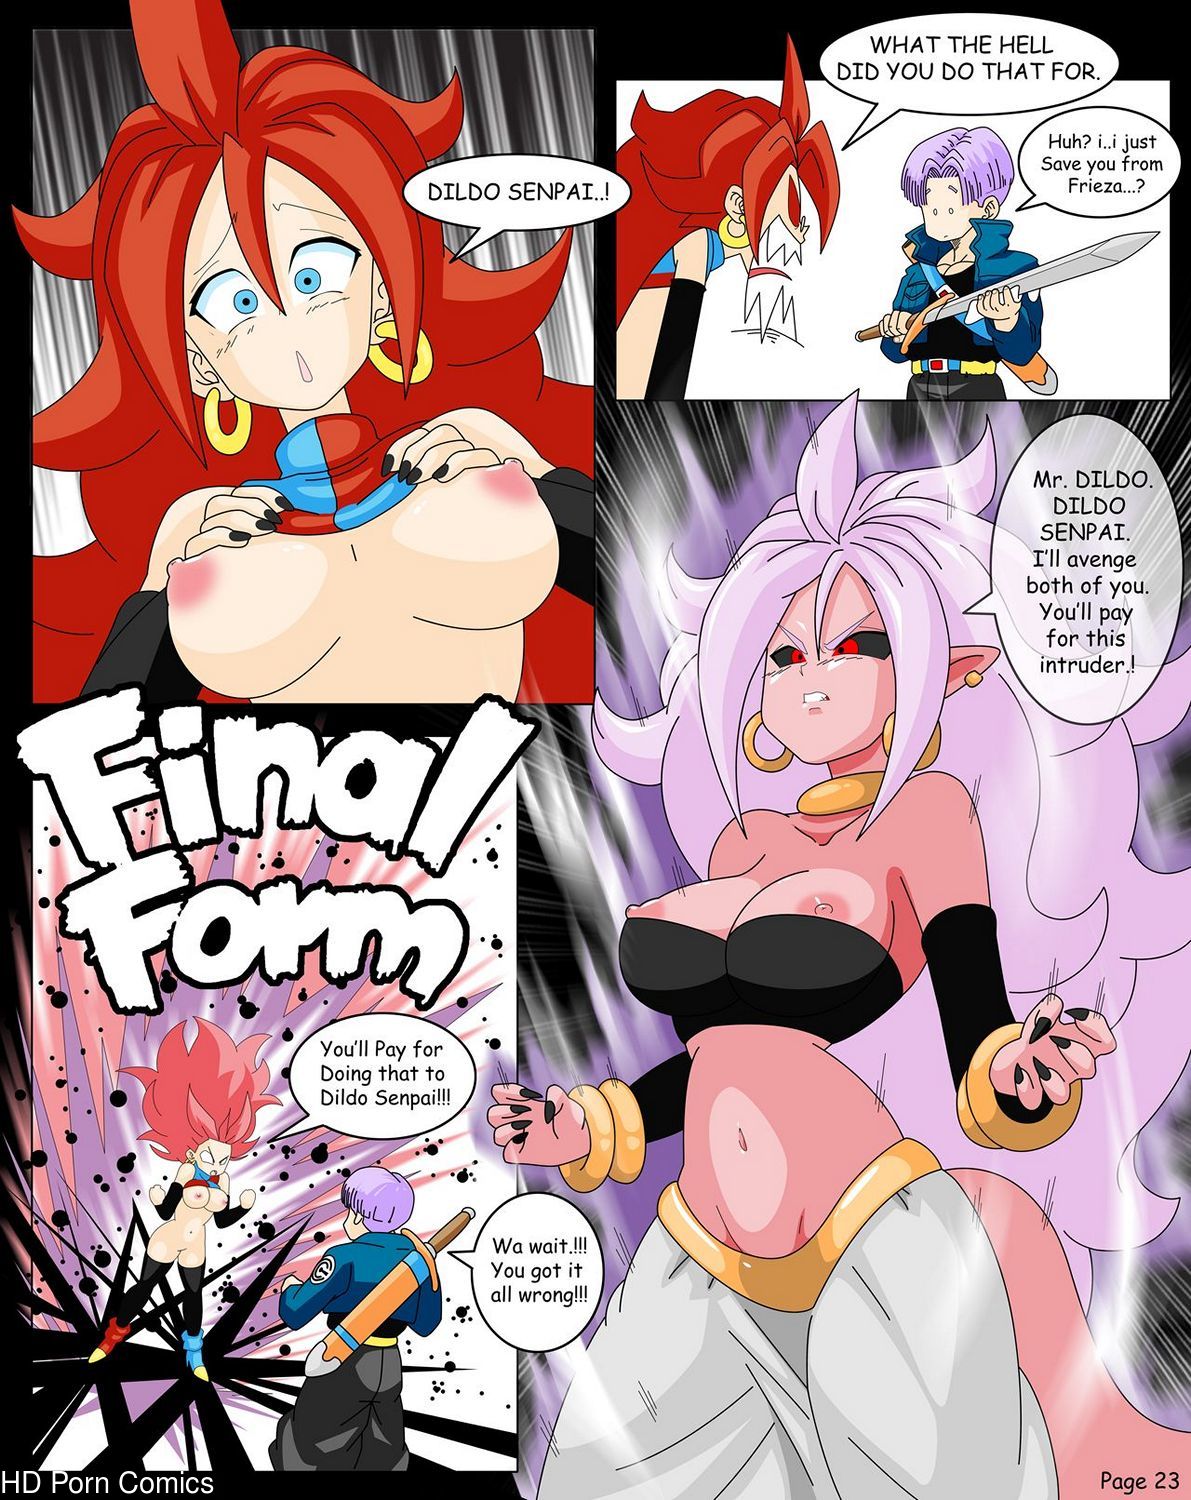 Cartoon Sex Android - Dragon Ball Yamete - Android 21 Saga comic porn â€“ HD Porn Comics